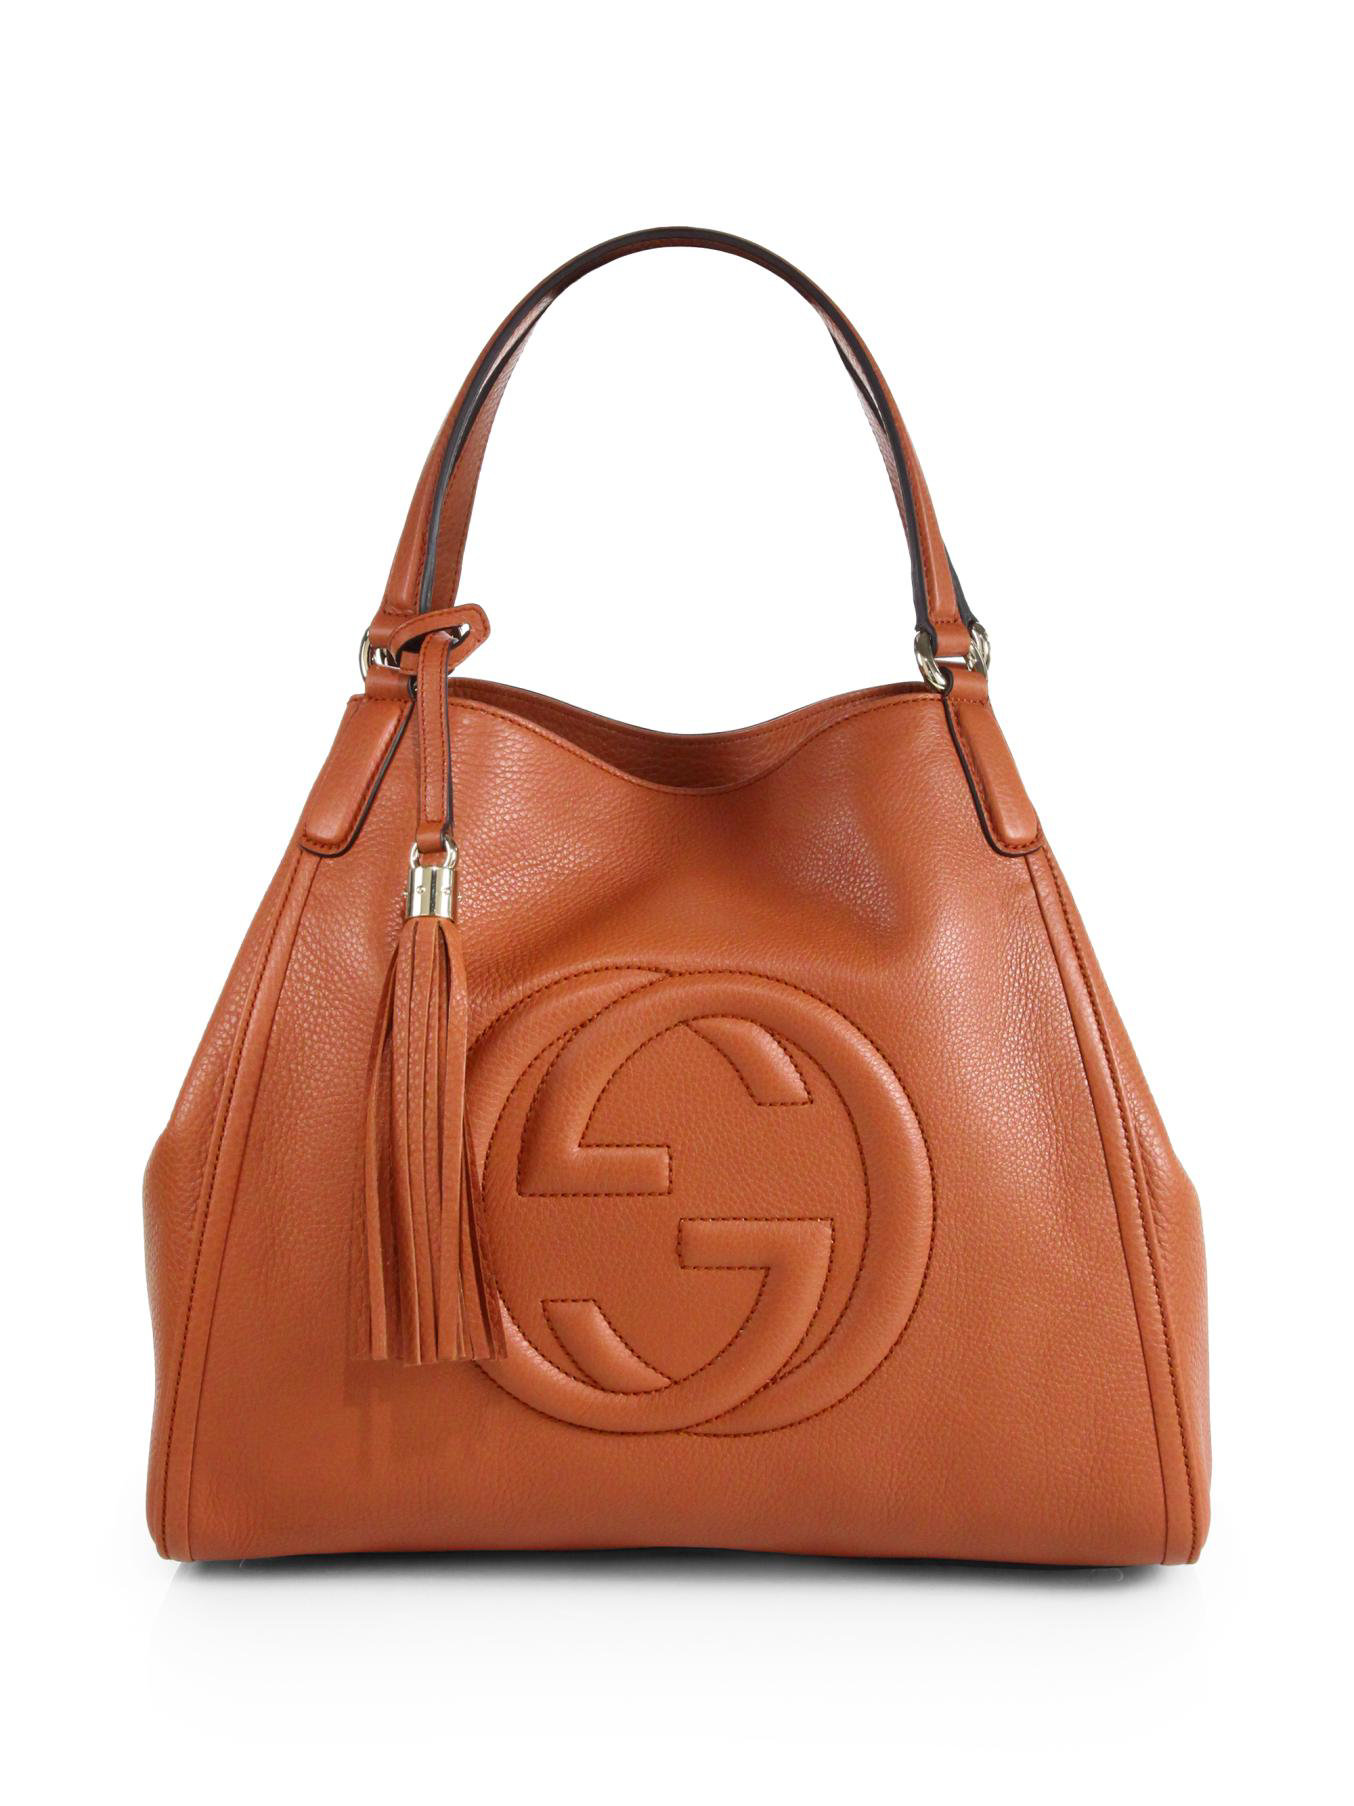 Gucci Soho Leather Shoulder Bag in (MOCHA) | Lyst